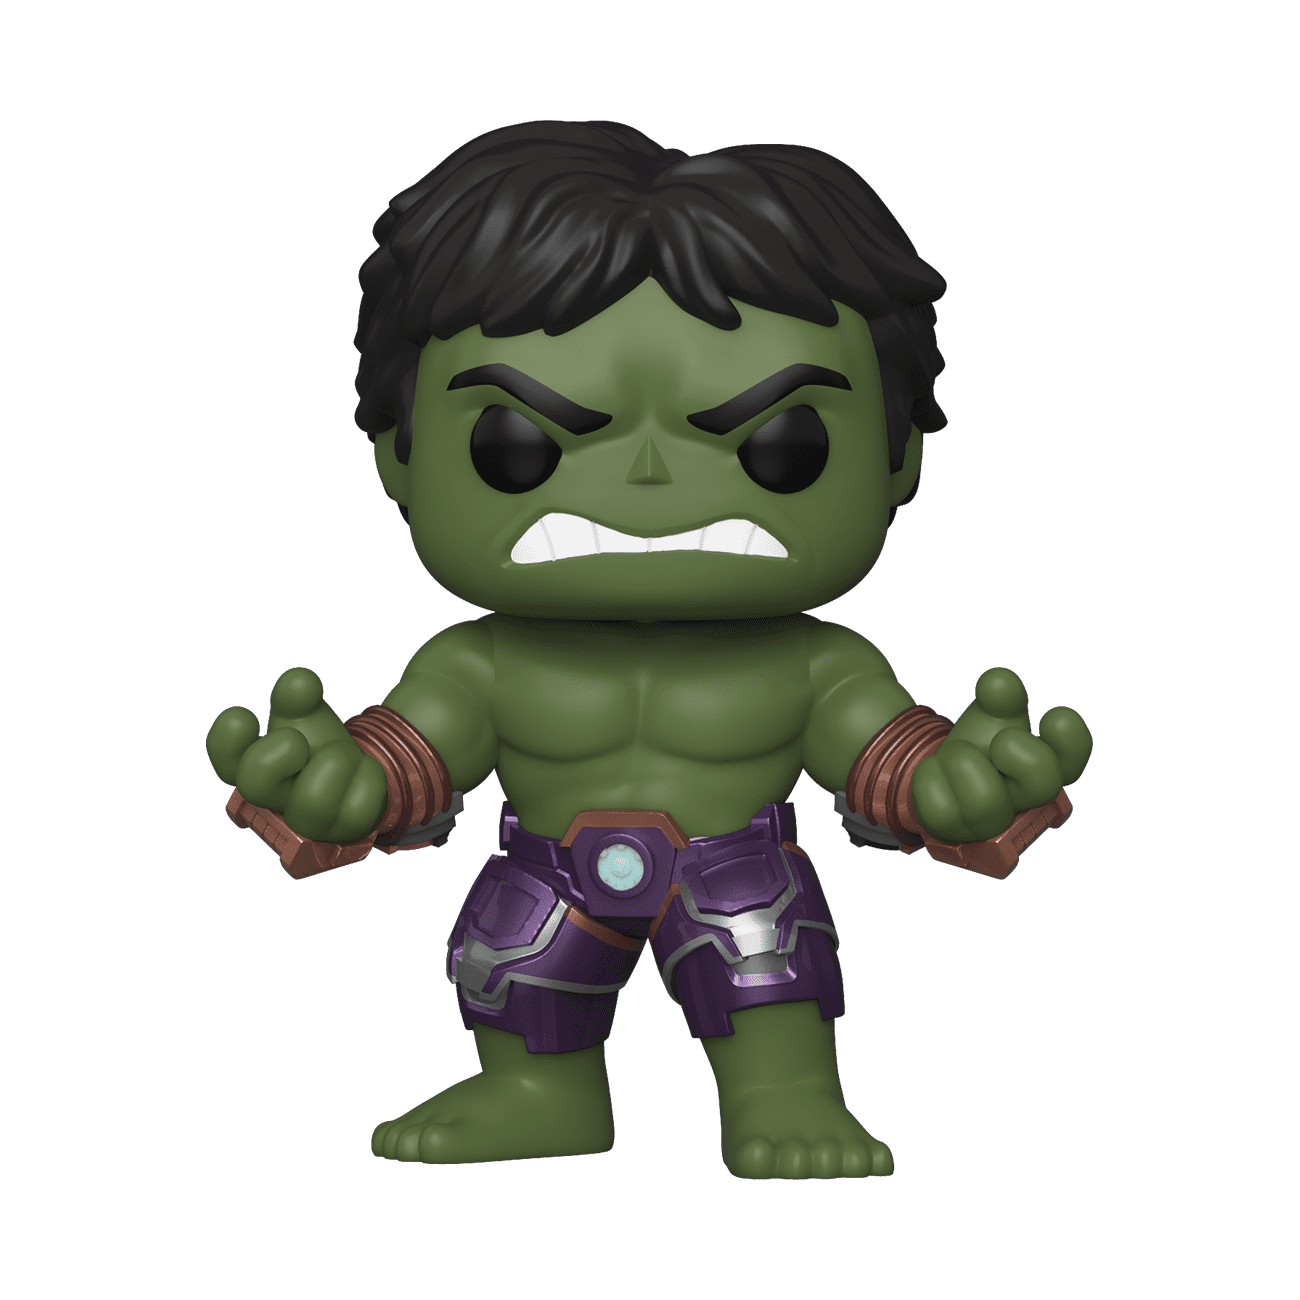 Funko POP Marvel: Thor - Hulk- Walmart Exclusive 